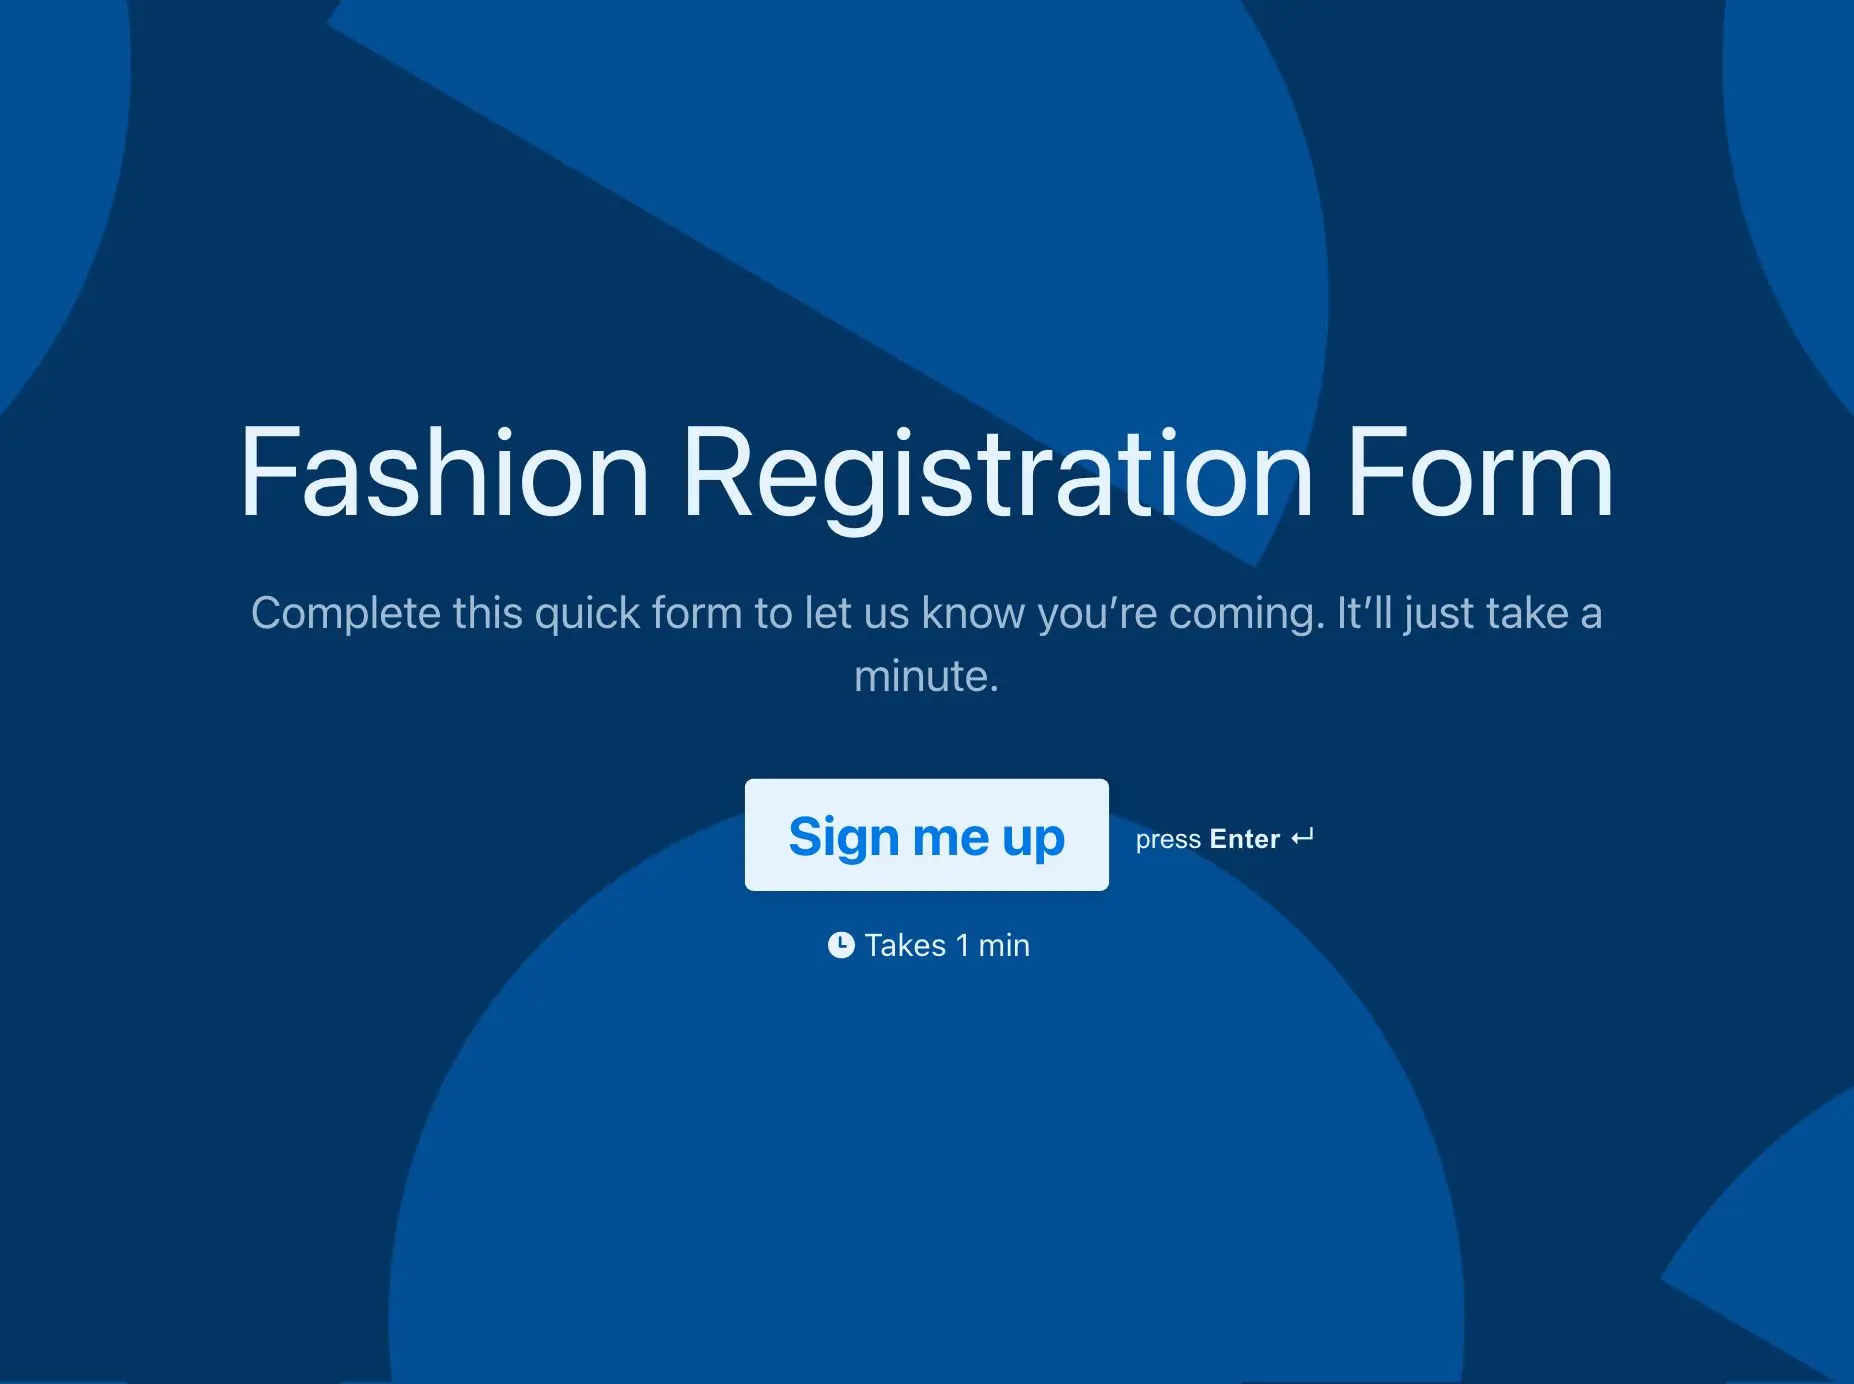 Fashion Registration Form Template Hero